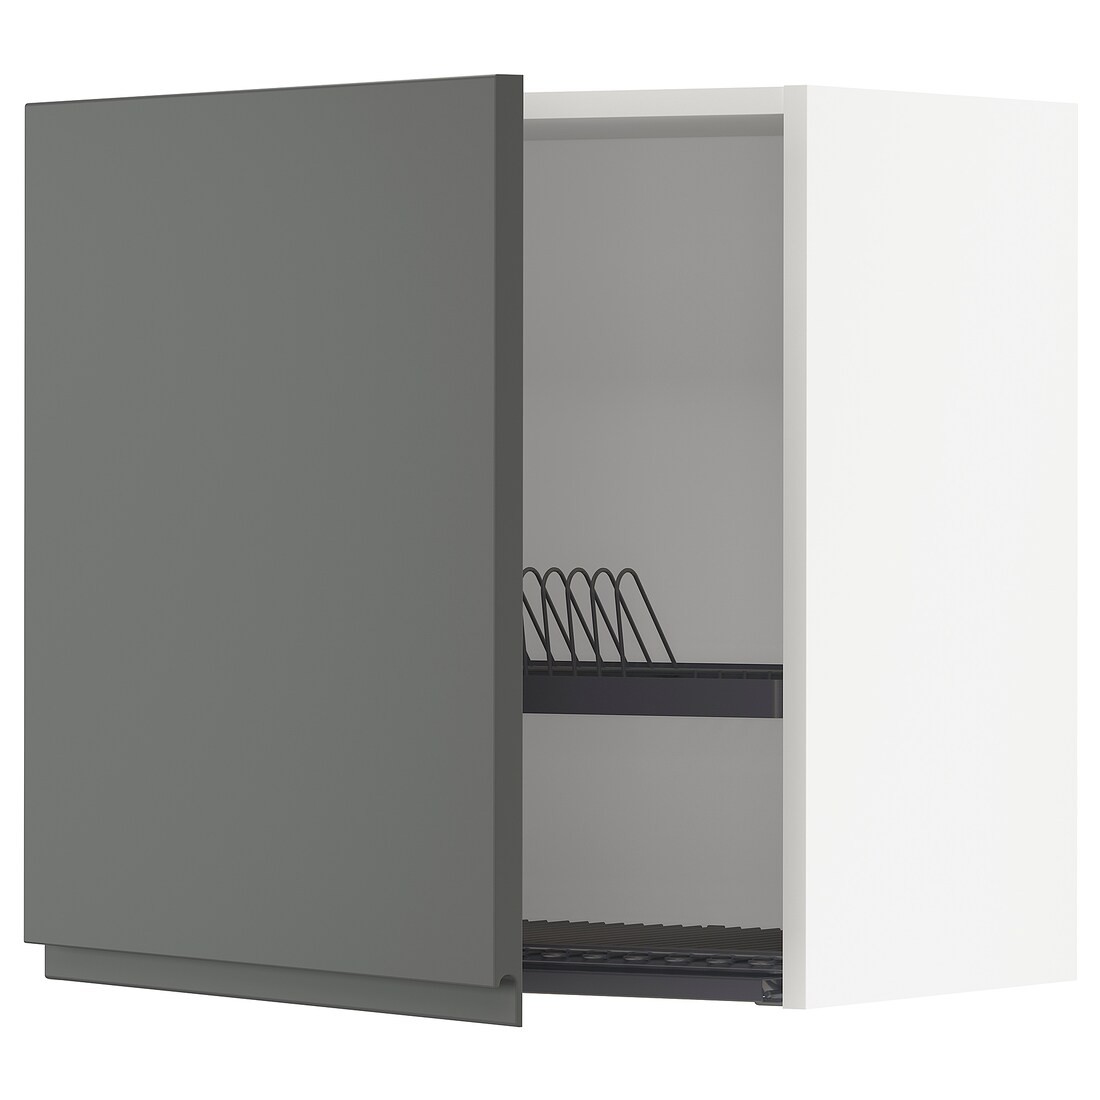 METOD МЕТОД Навесной шкаф с сушилкой, белый / Voxtorp темно-серый, 60x60 см